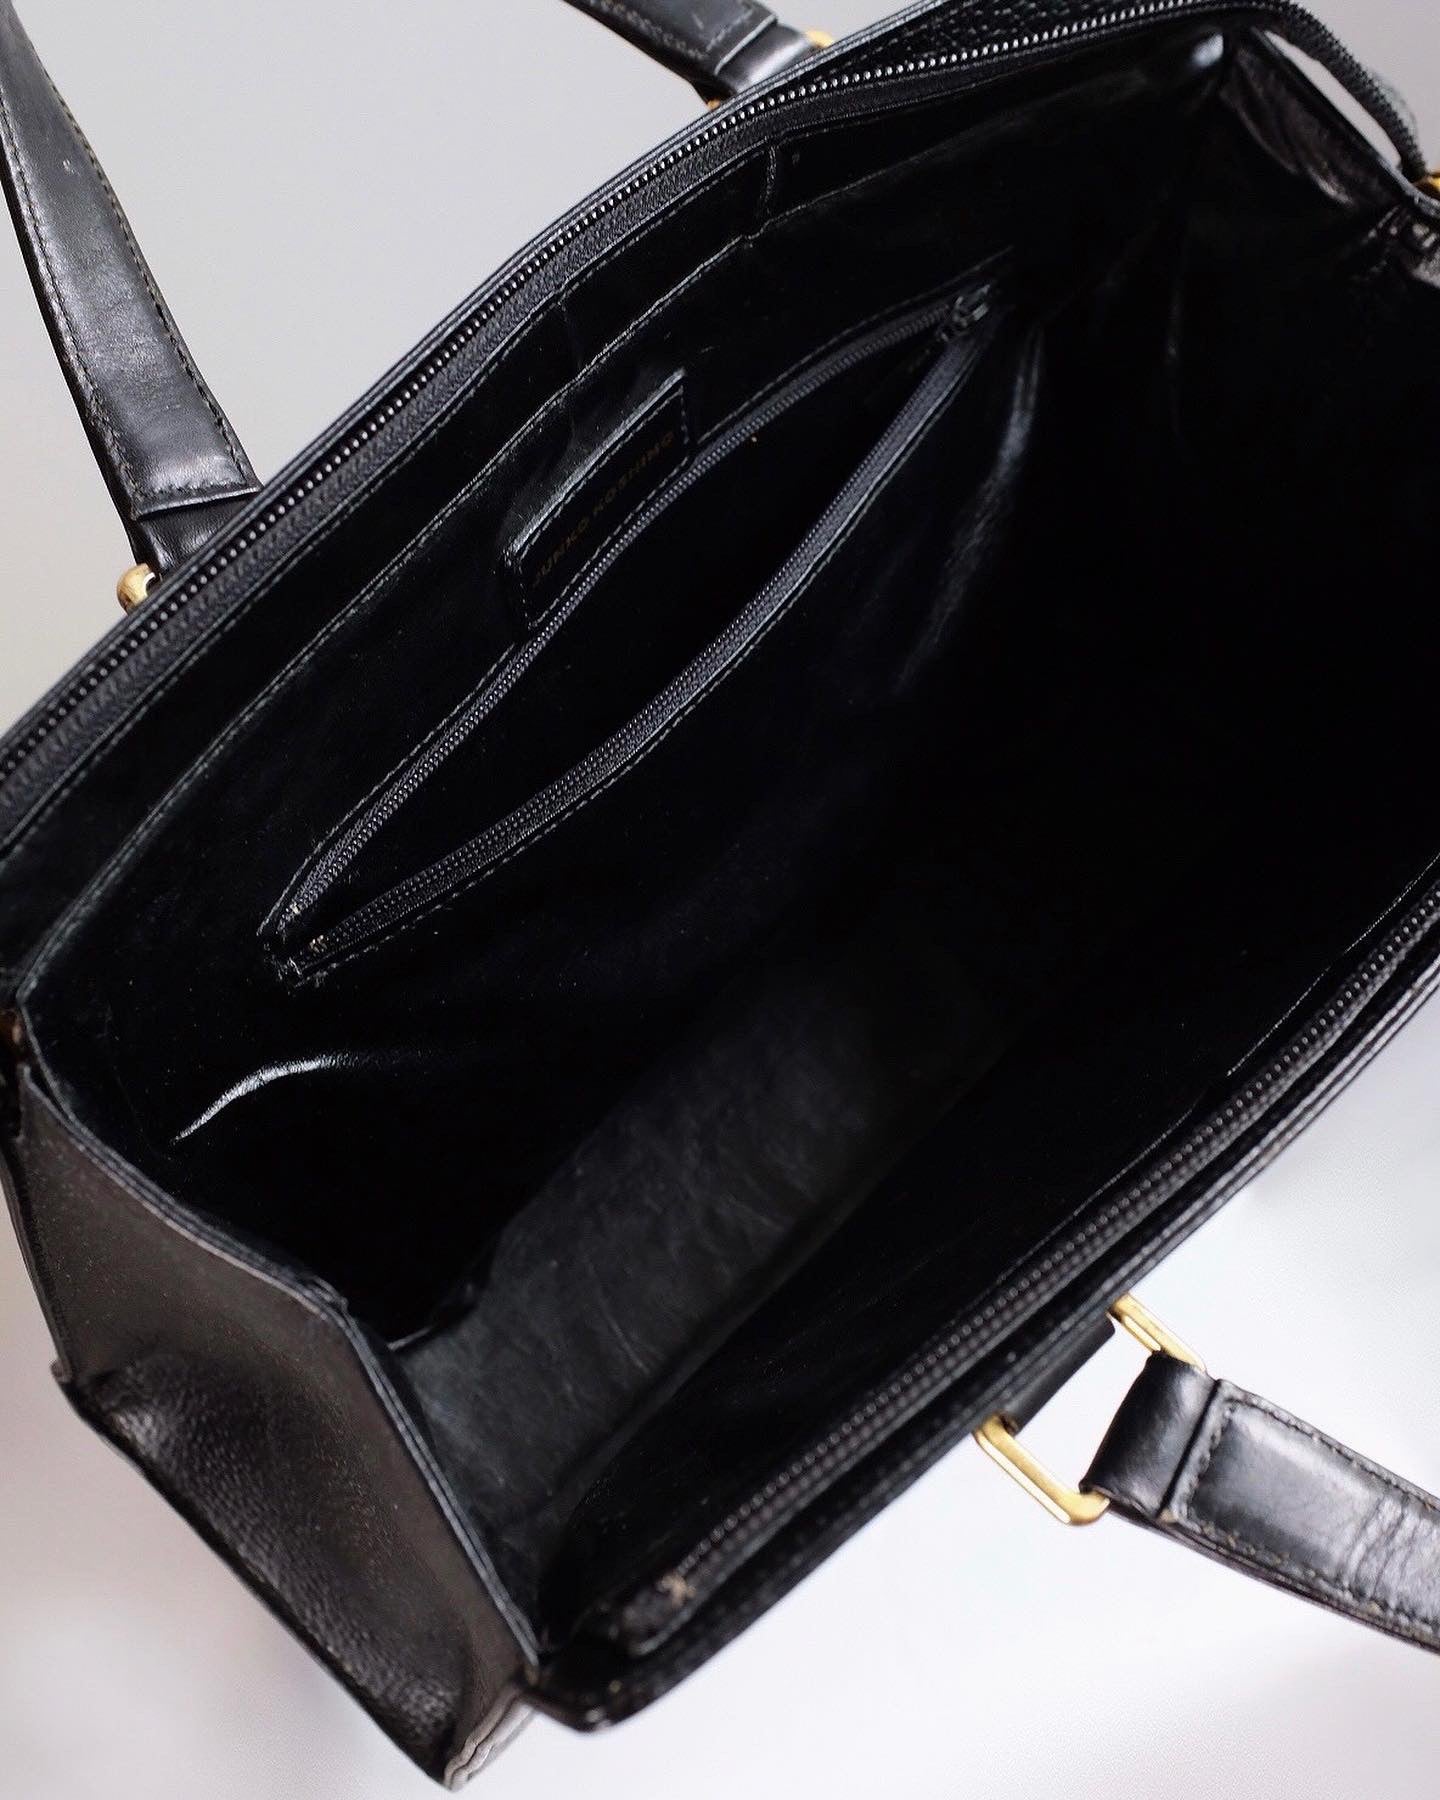 JUNKO KOSHINO Vintage Handbag